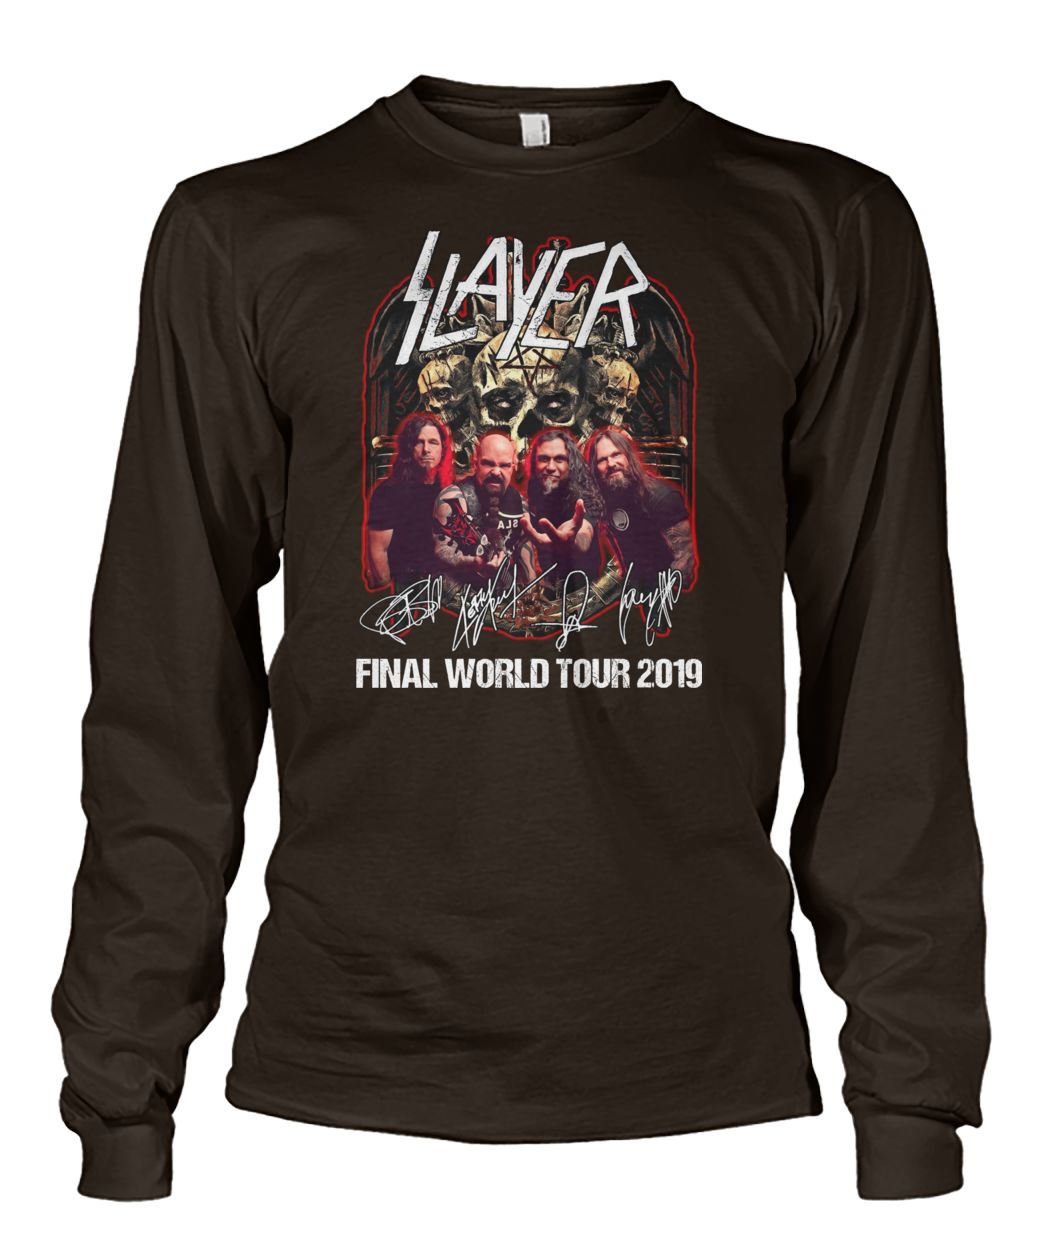 Thrash metal slayer final world tour 2019 unisex long sleeve